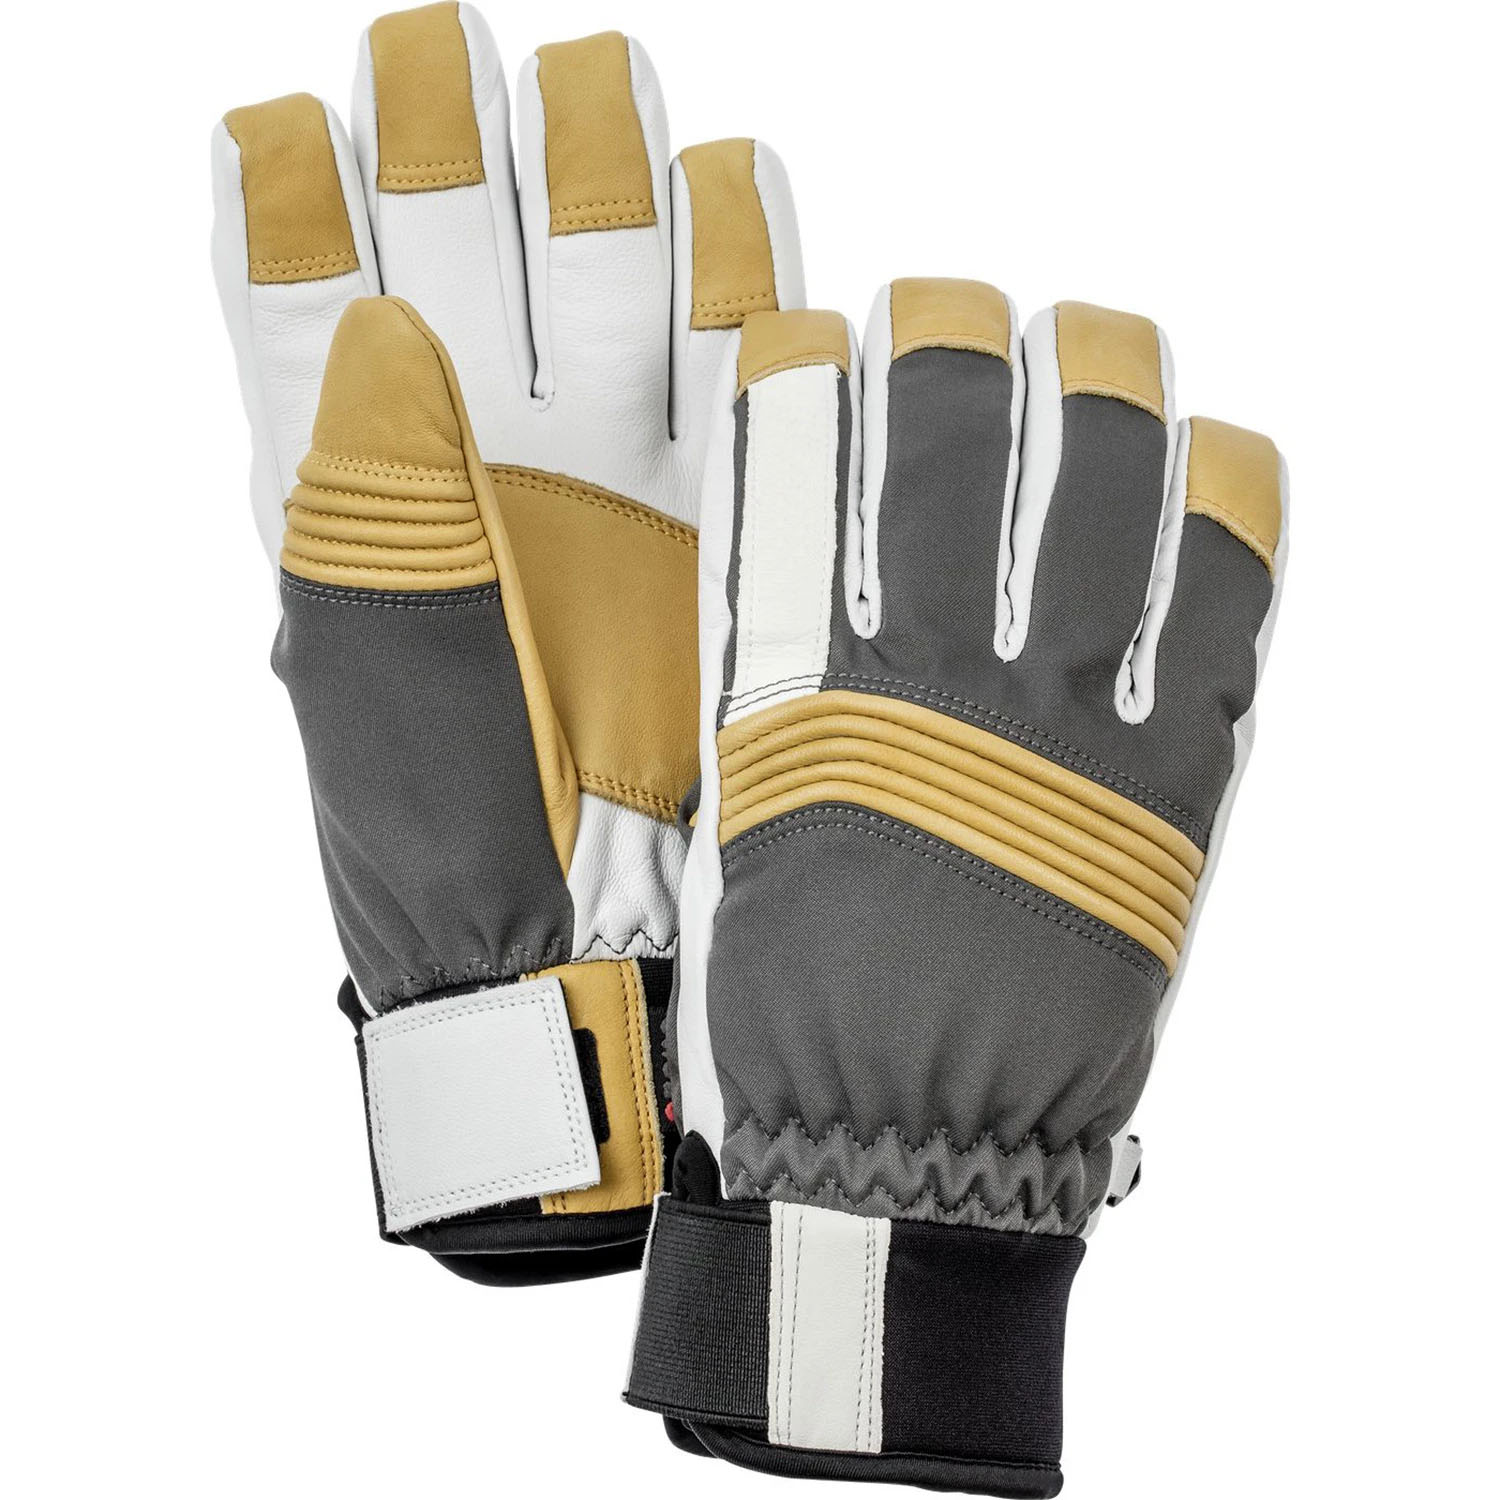 Waterproof ski gloves leather sports ski equipment insulated ski gloves